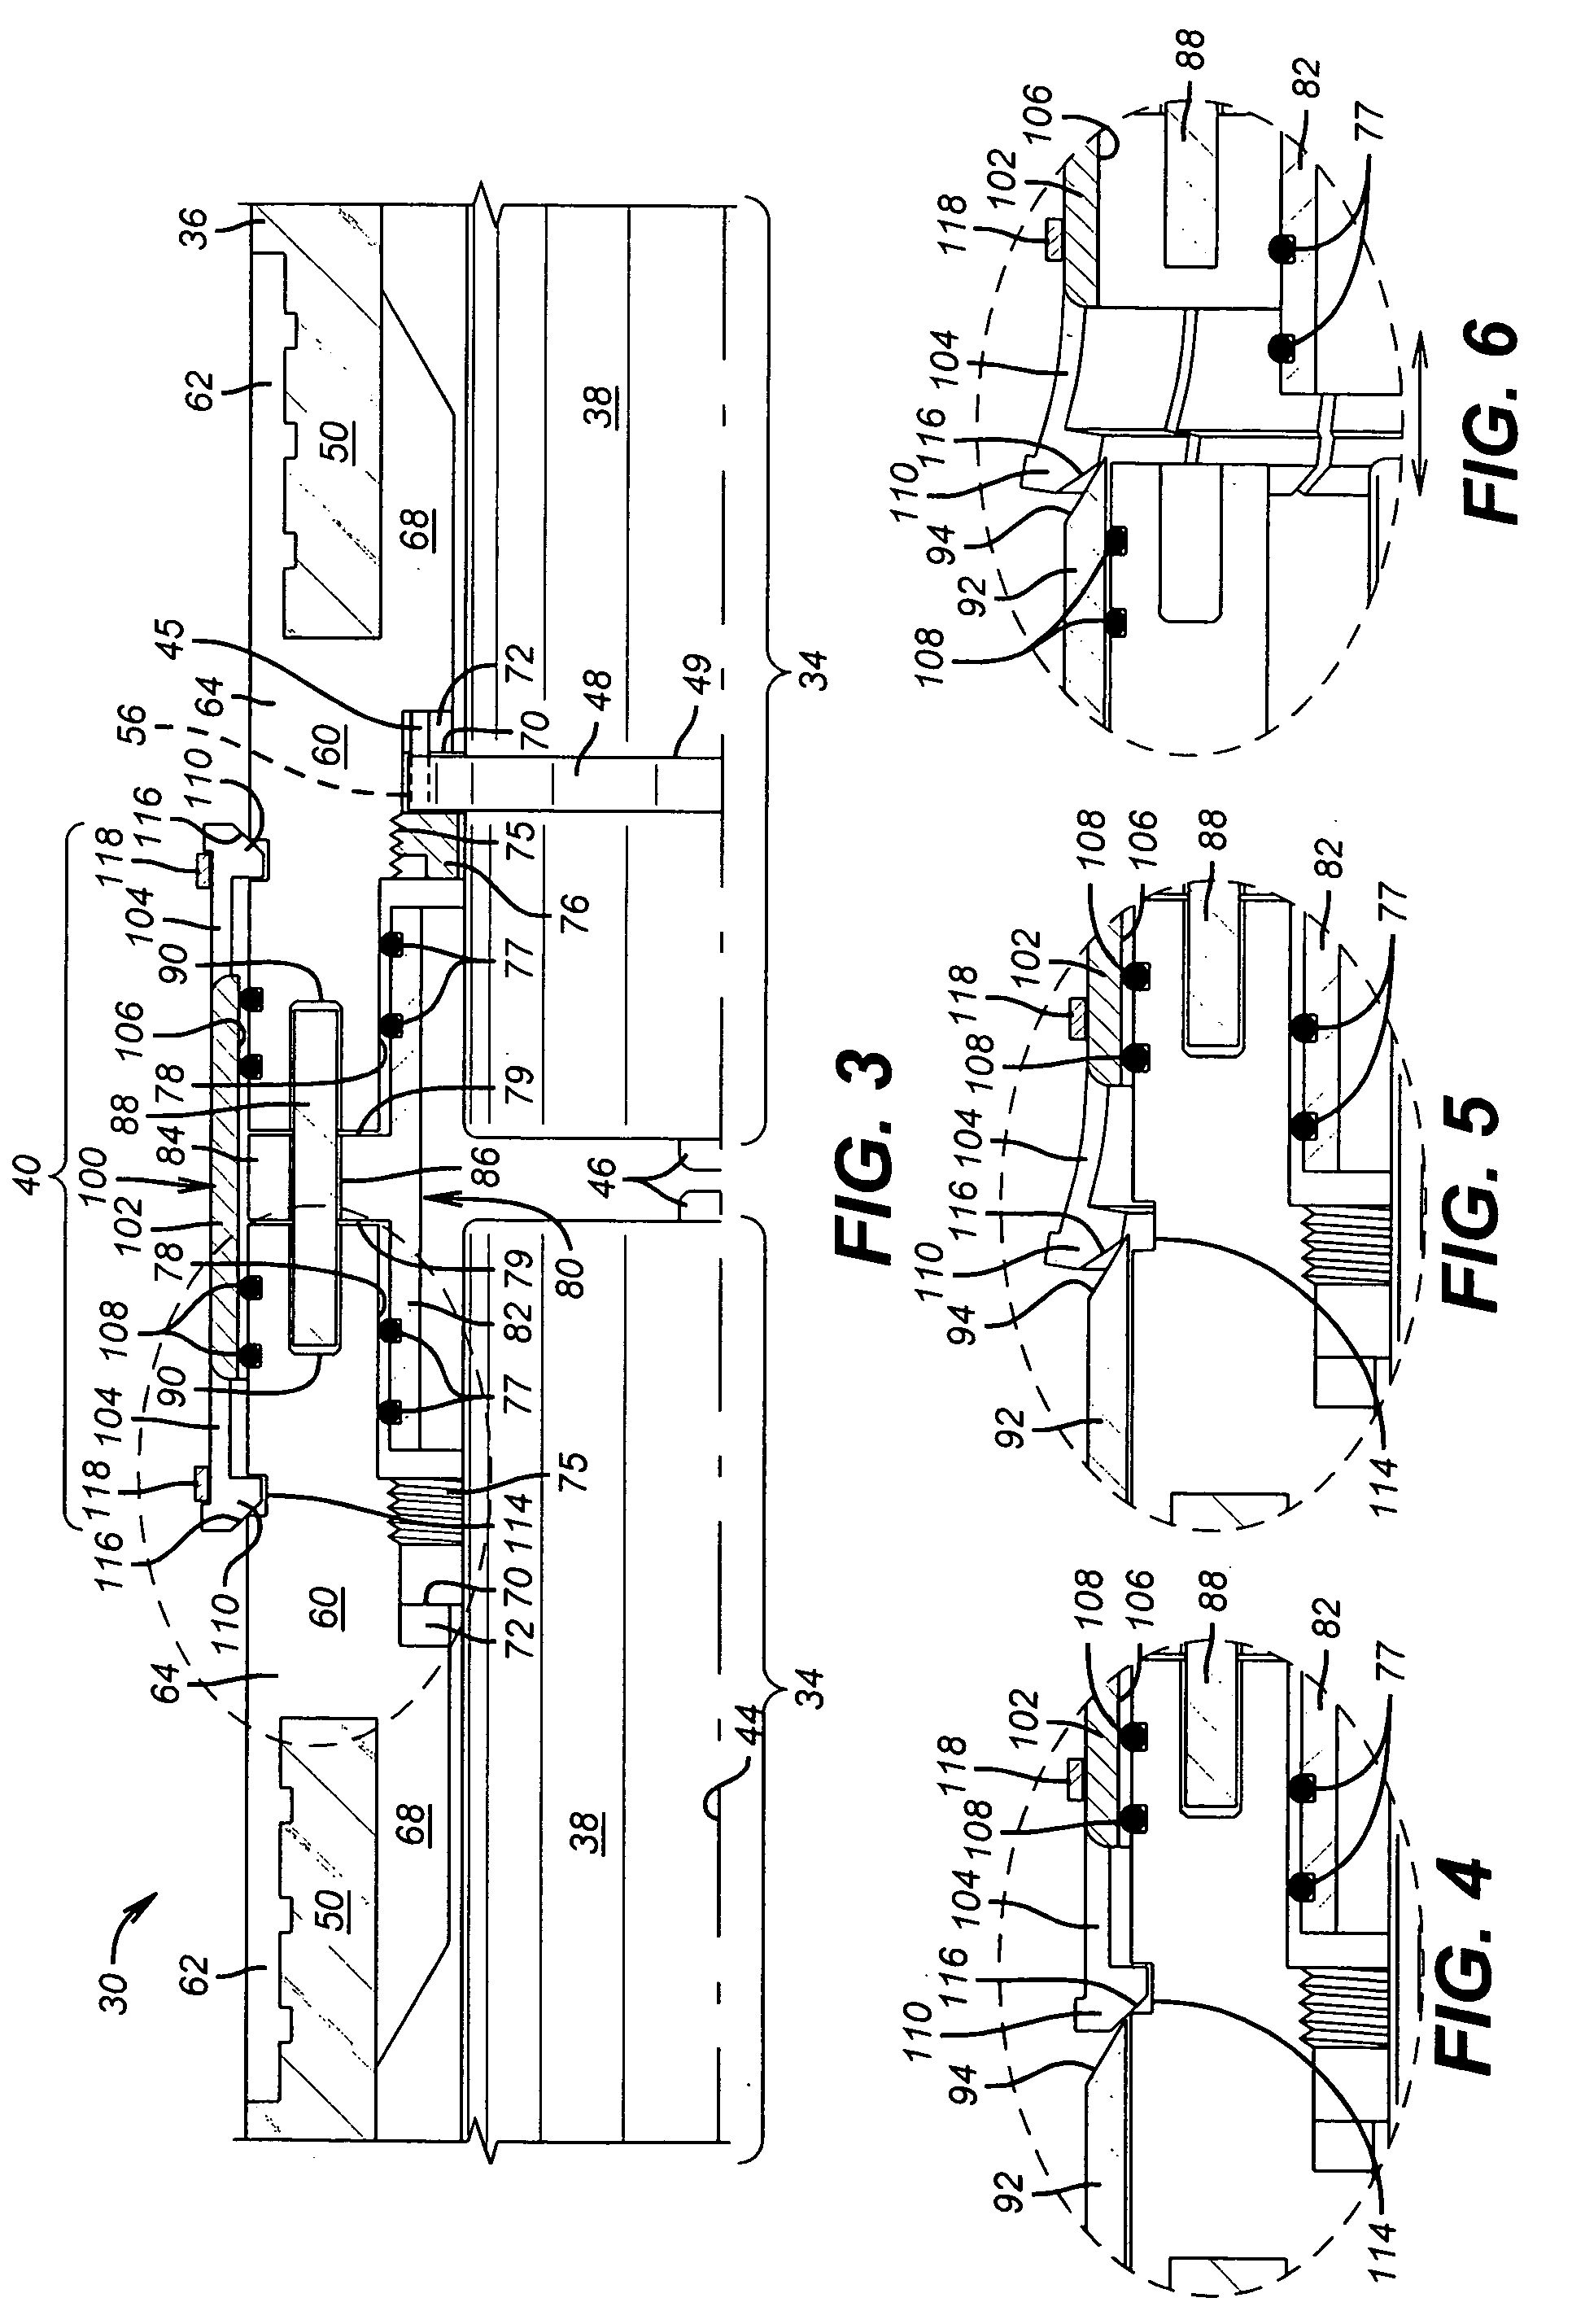 Perforating gun connector